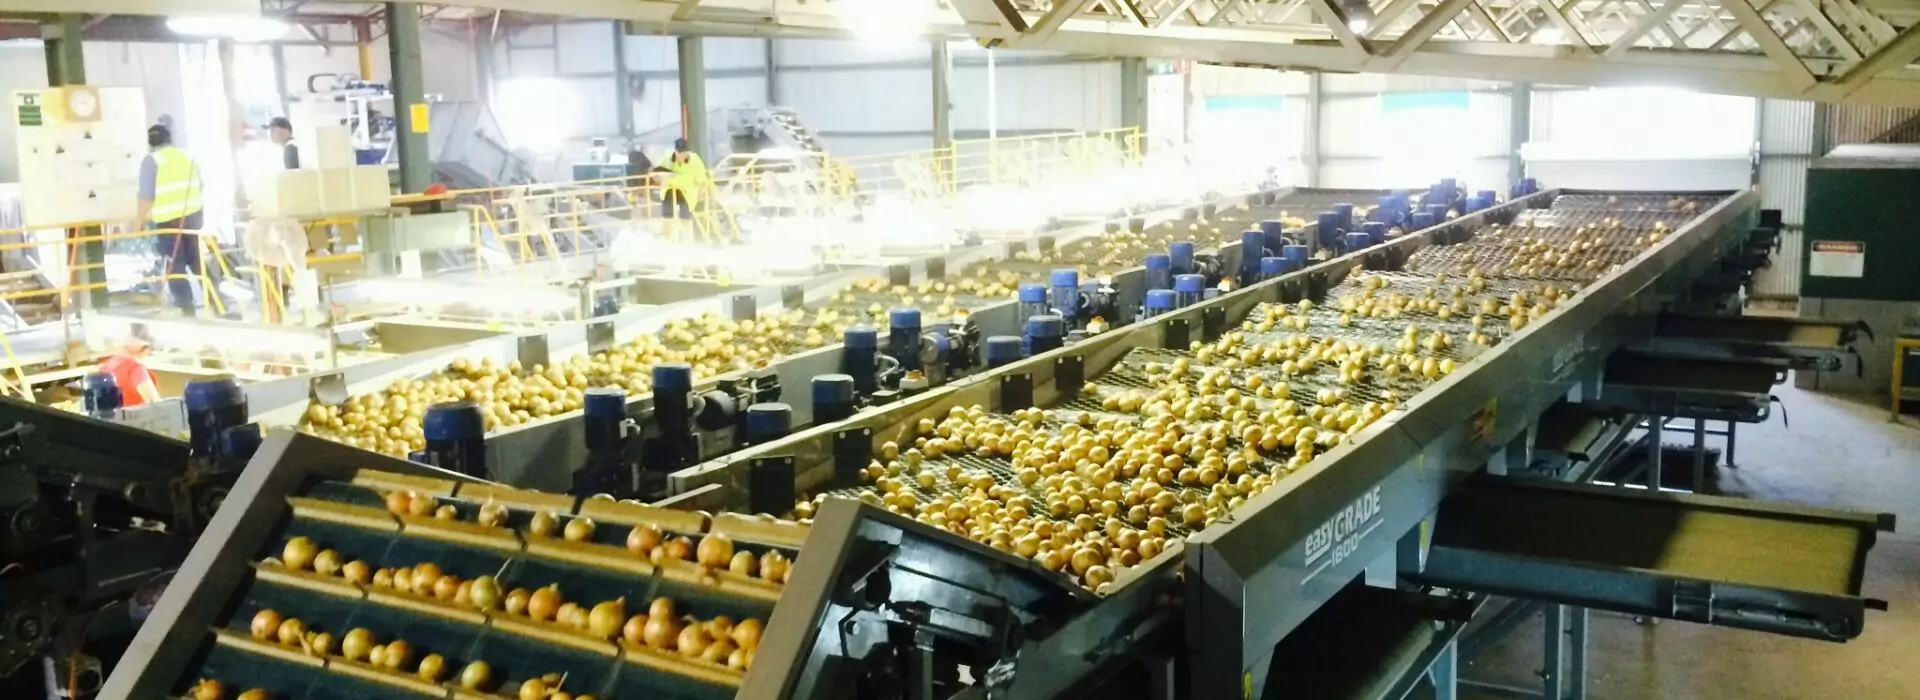 Field Fresh Onion Conveyor & Onion Grading Line | Tong Engineering